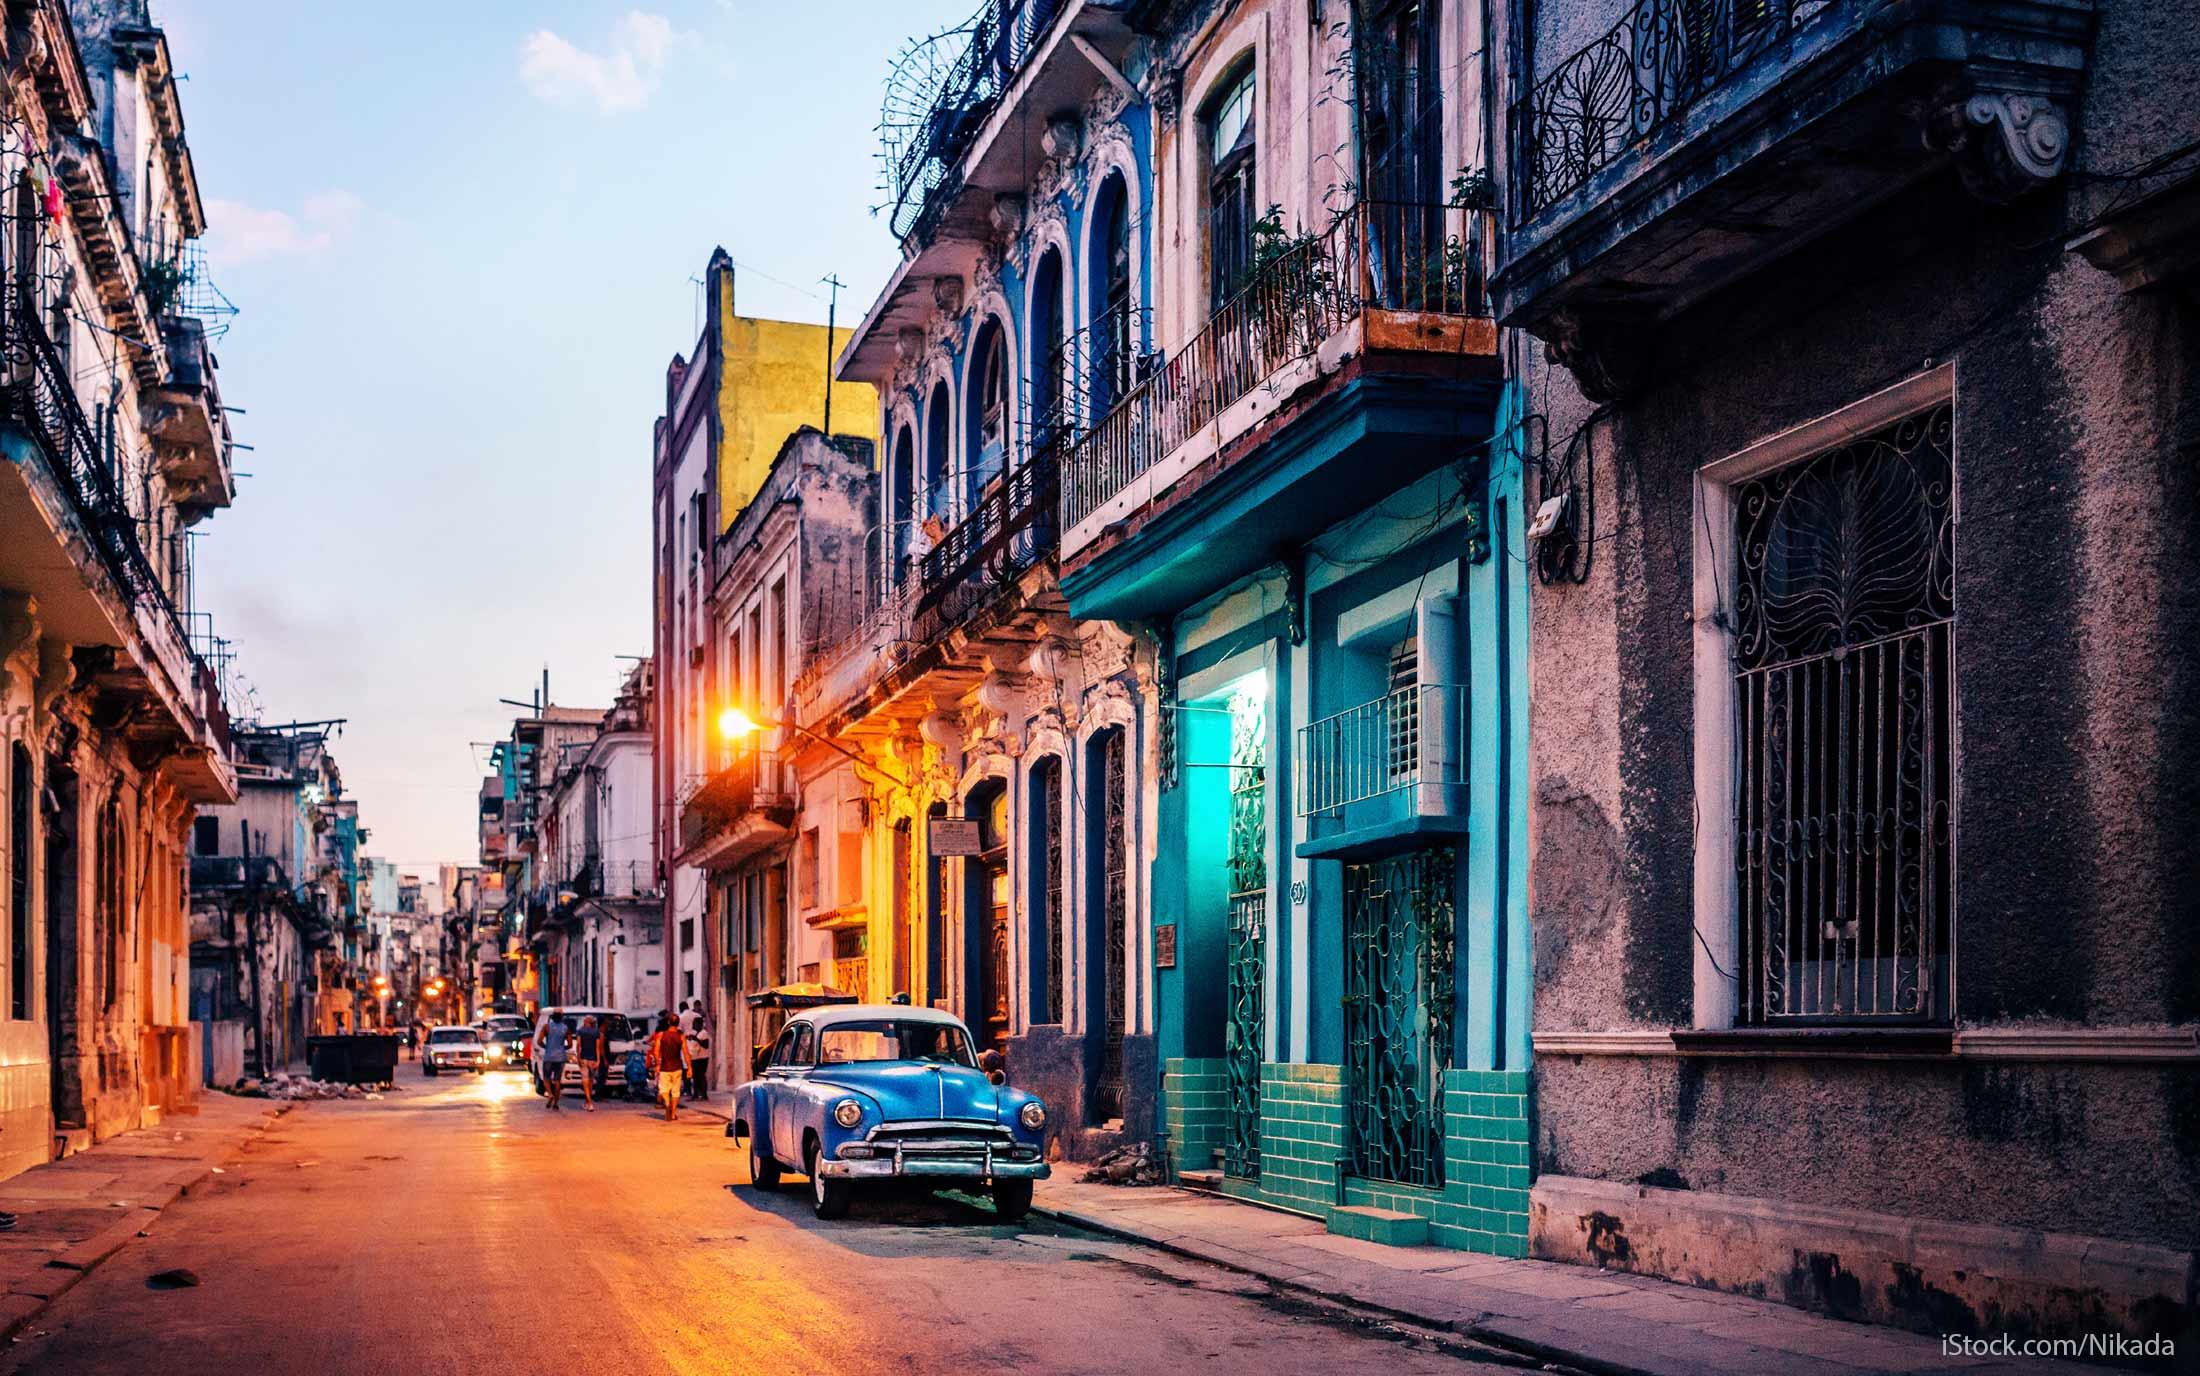 Cuba tourism photo of a street